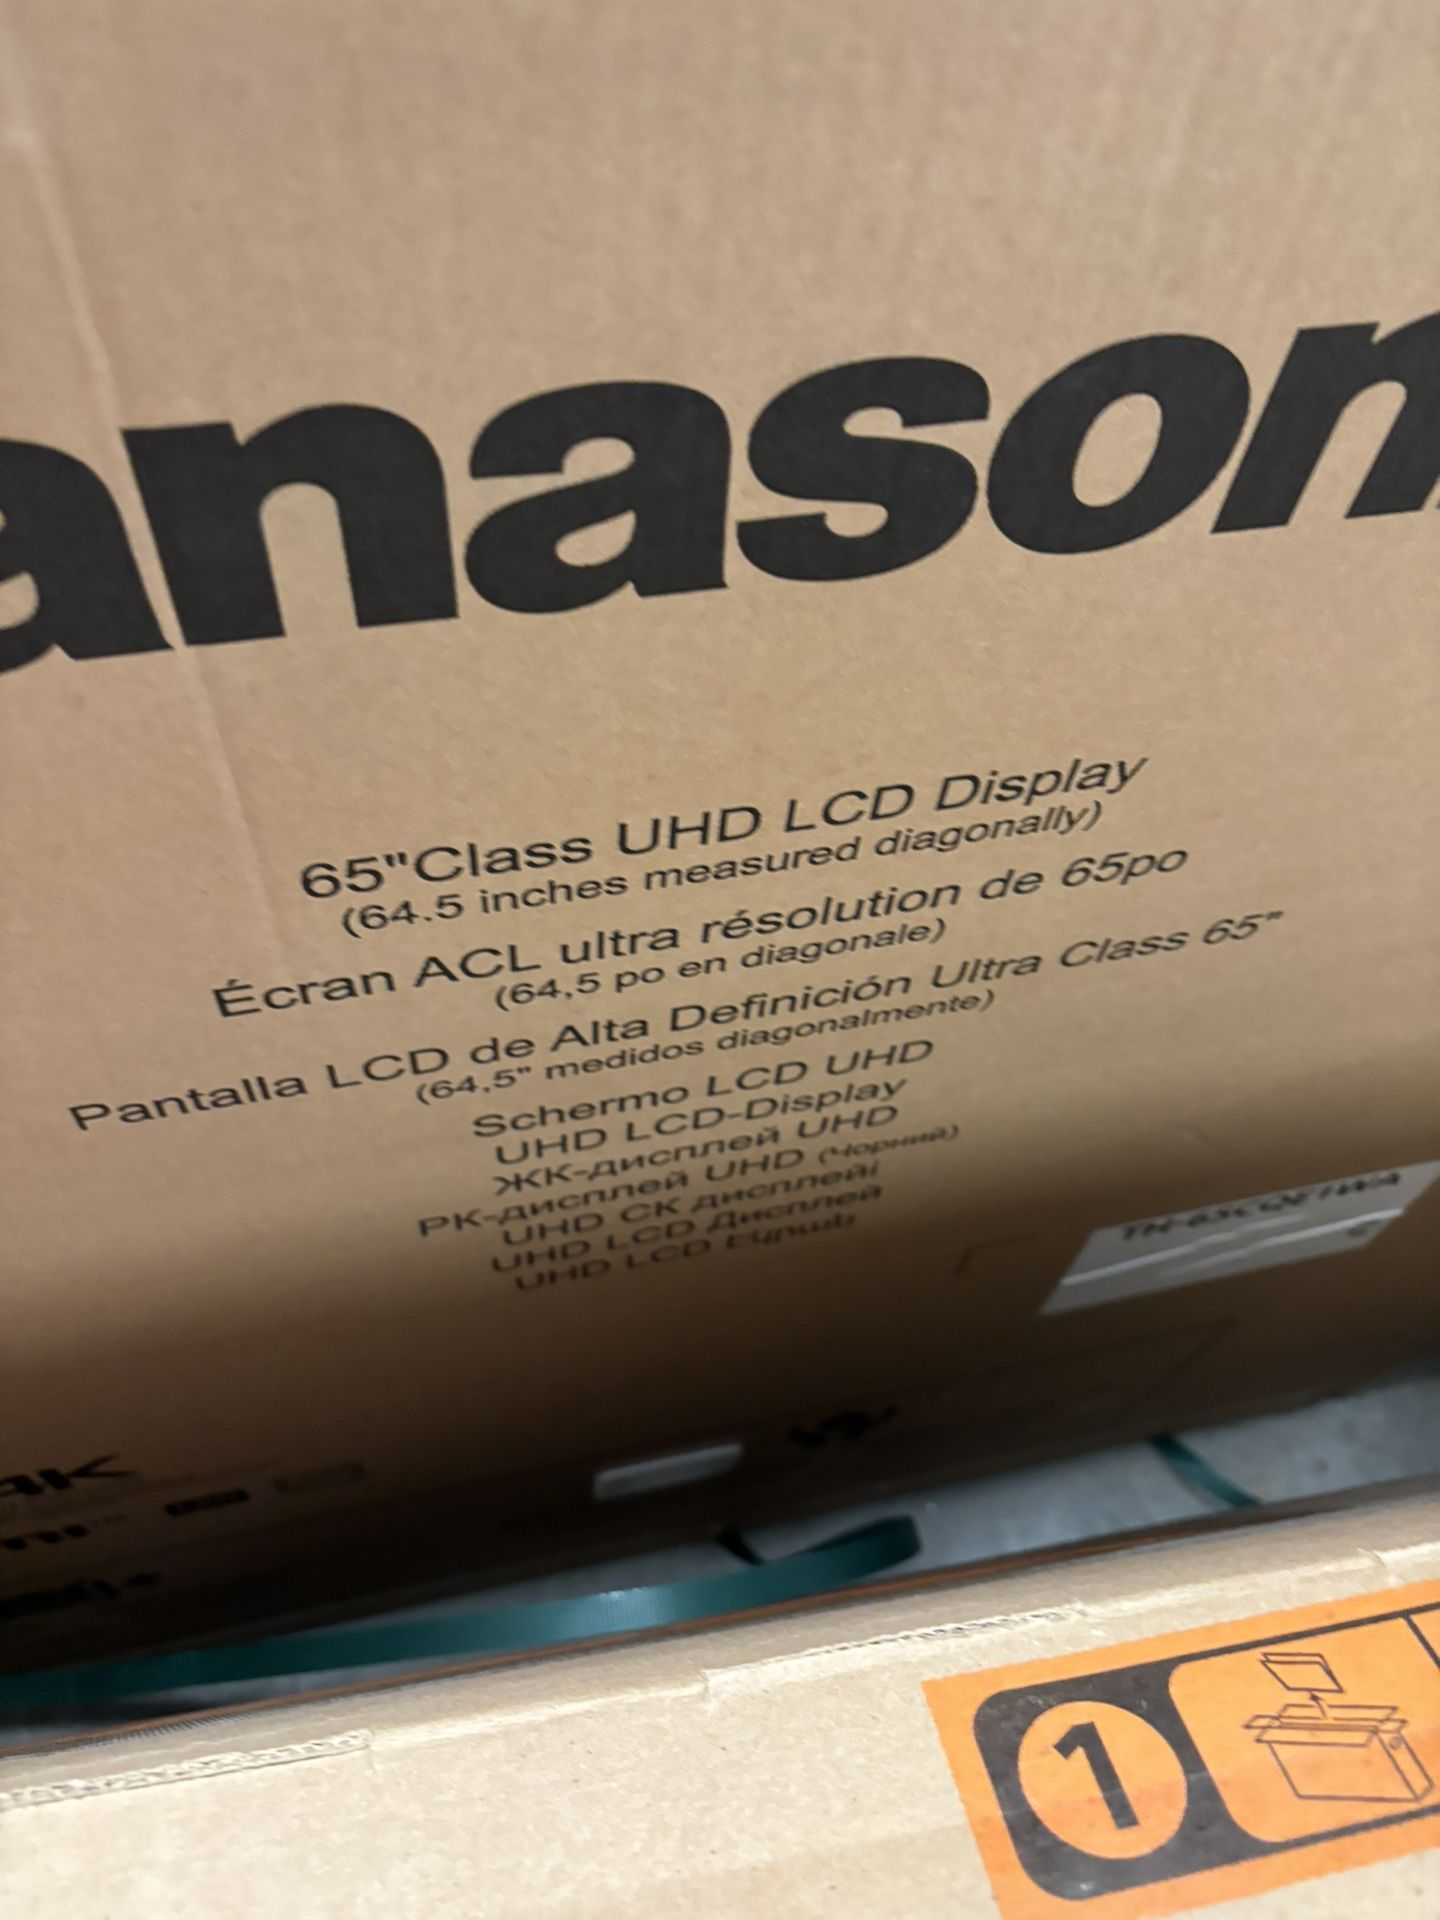 Panasonic Sqe1w 65 Class 4k Uhd Led Display 